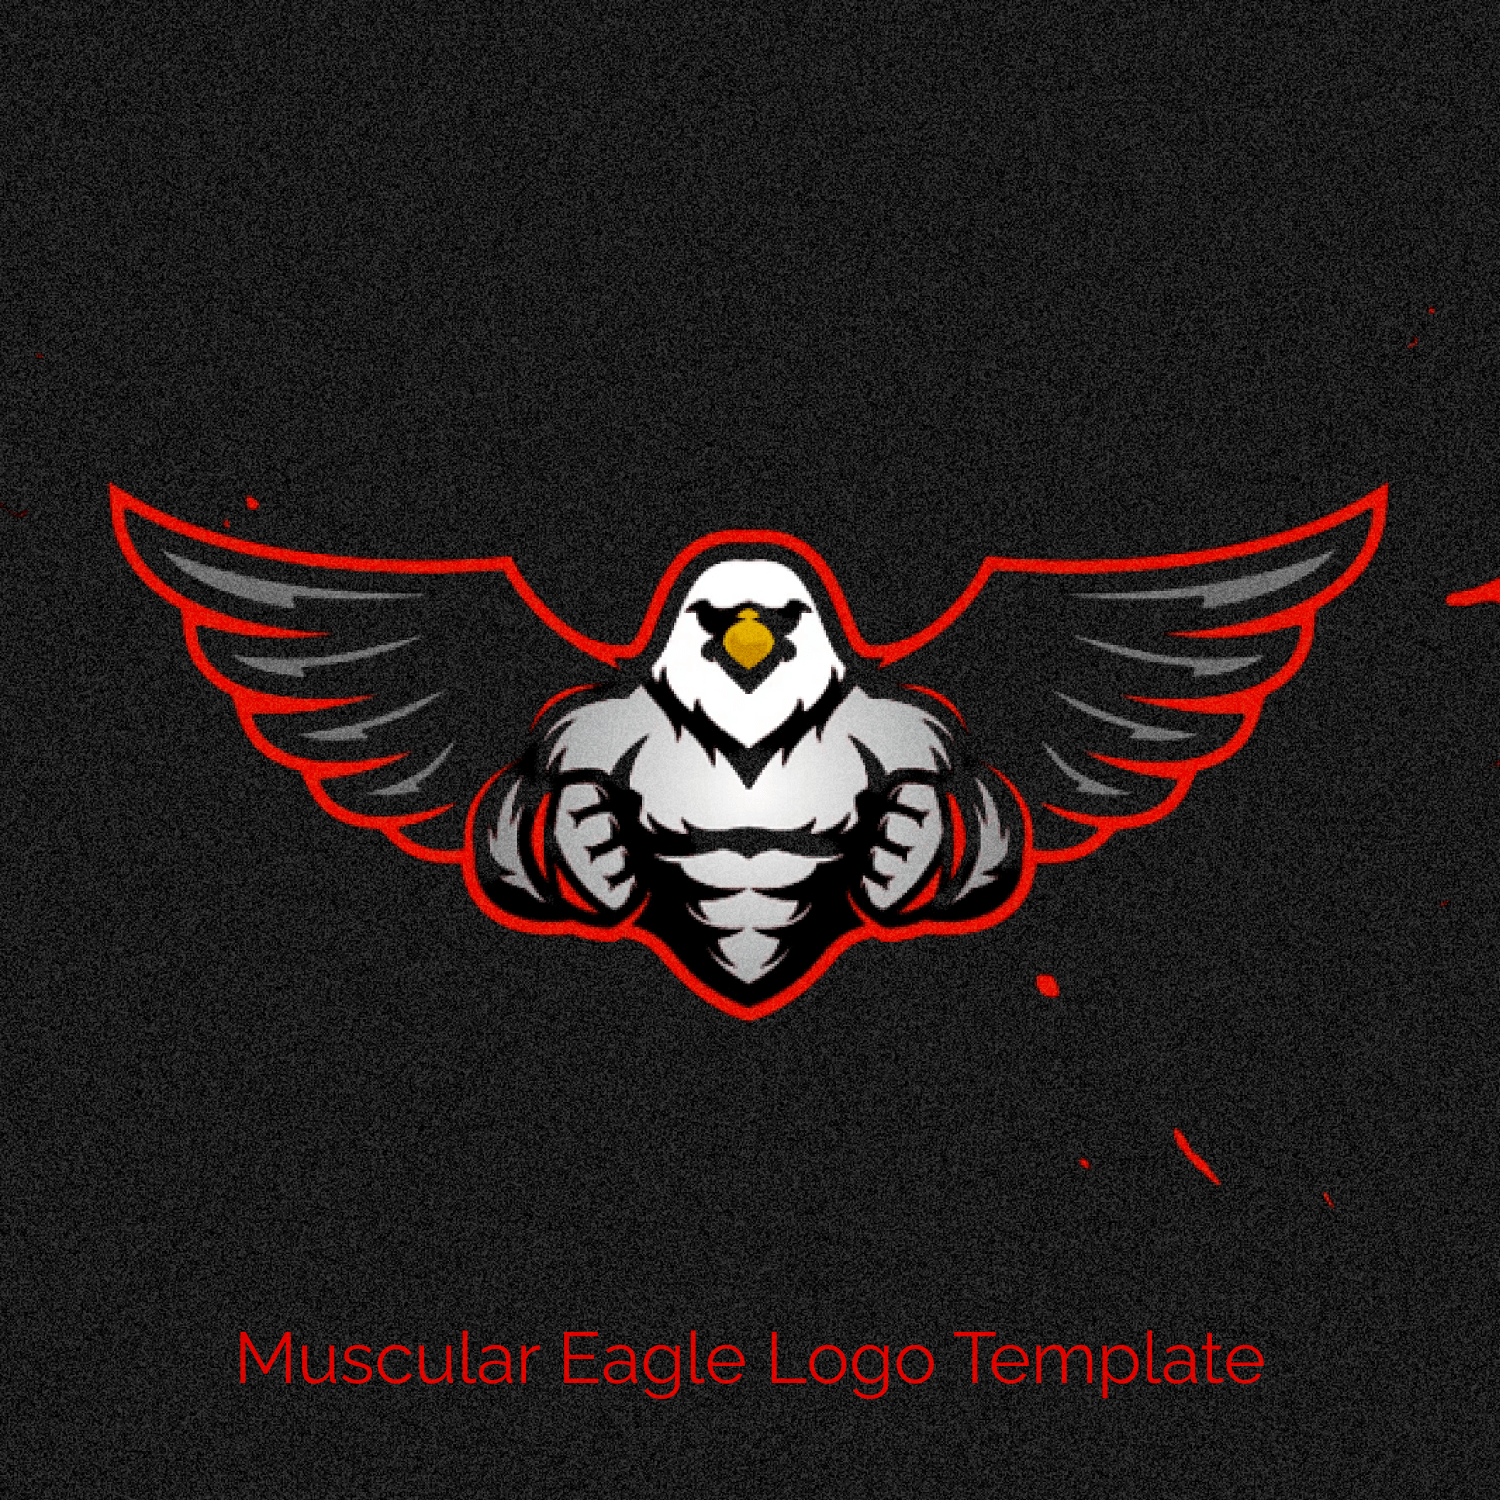 Muscular eagle logo.